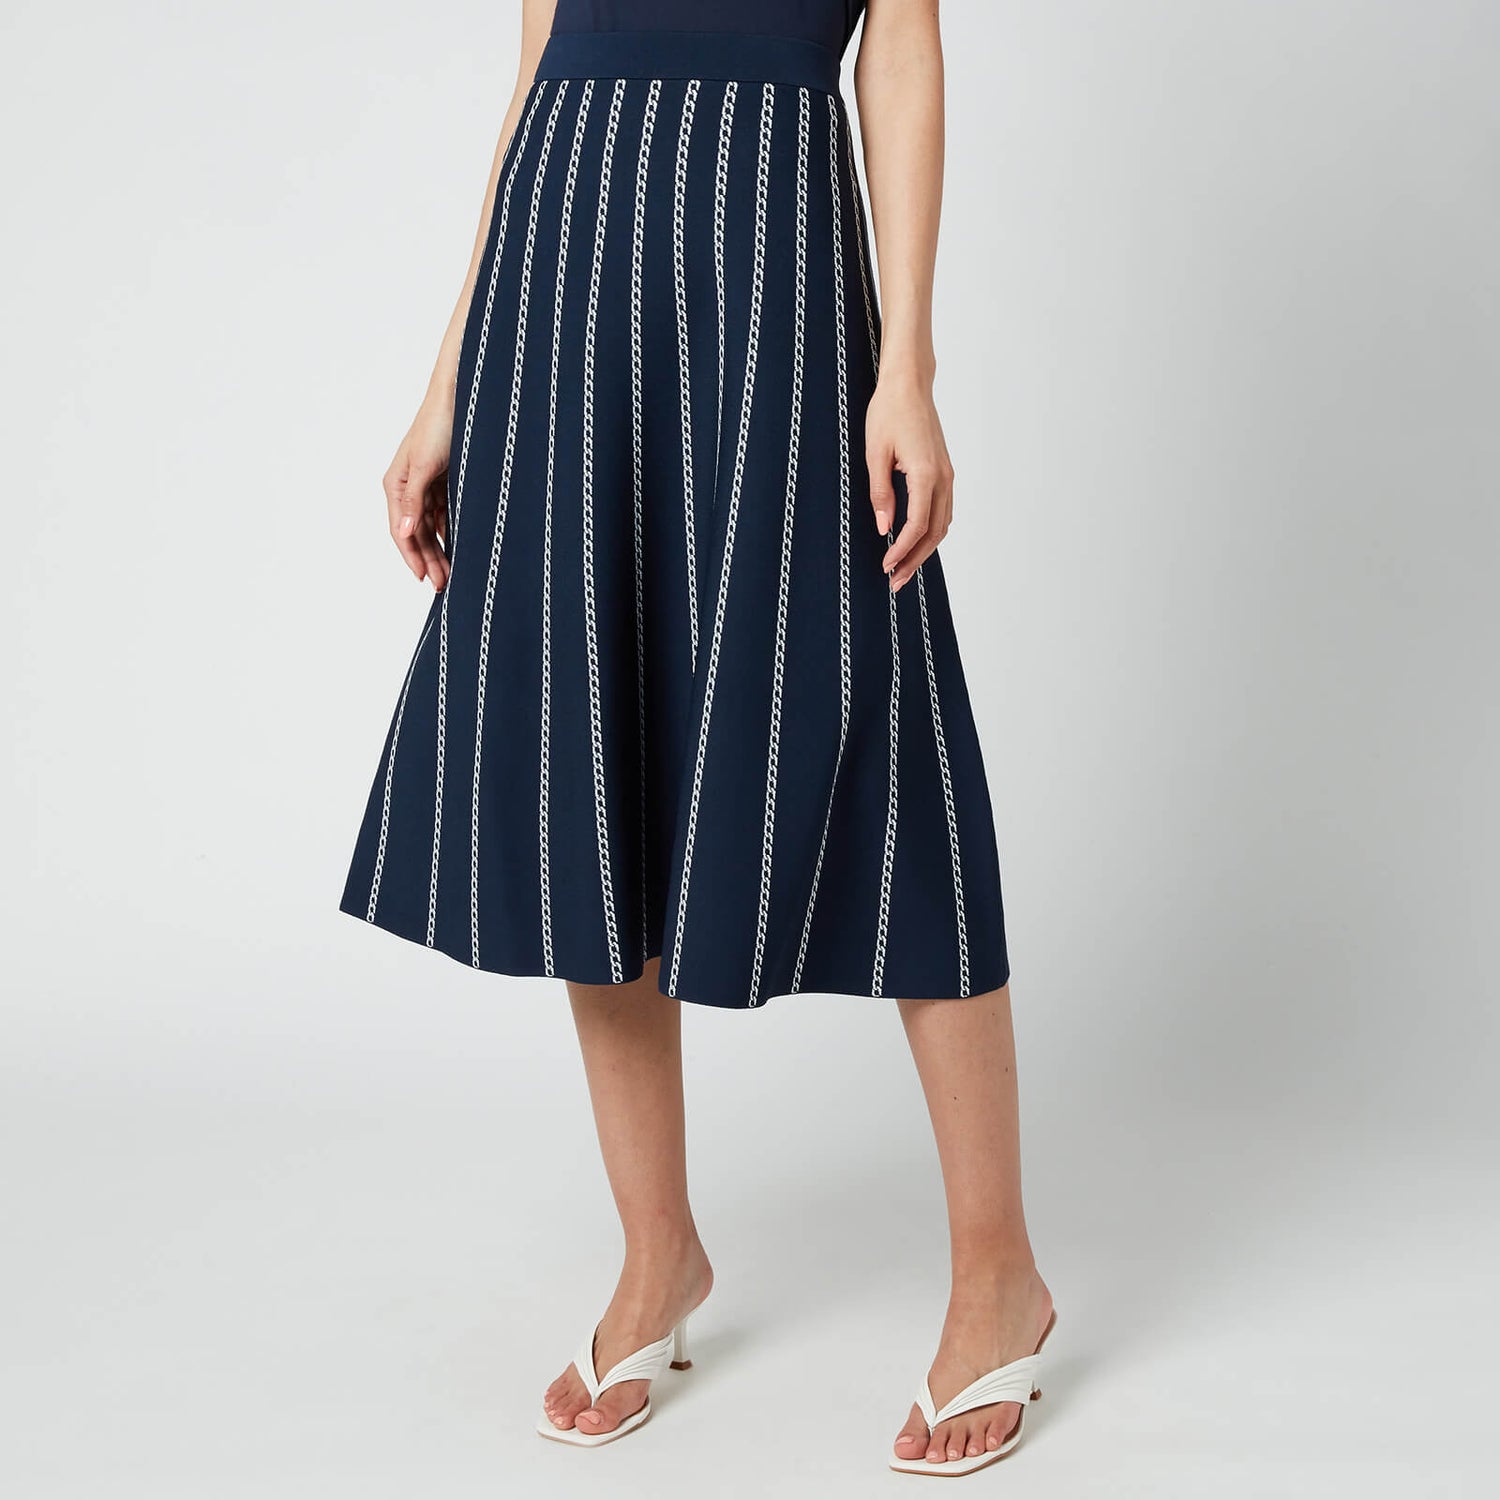 MICHAEL Michael Kors Women's Pin Stripe Chain Skirt - Midnight Blue/White